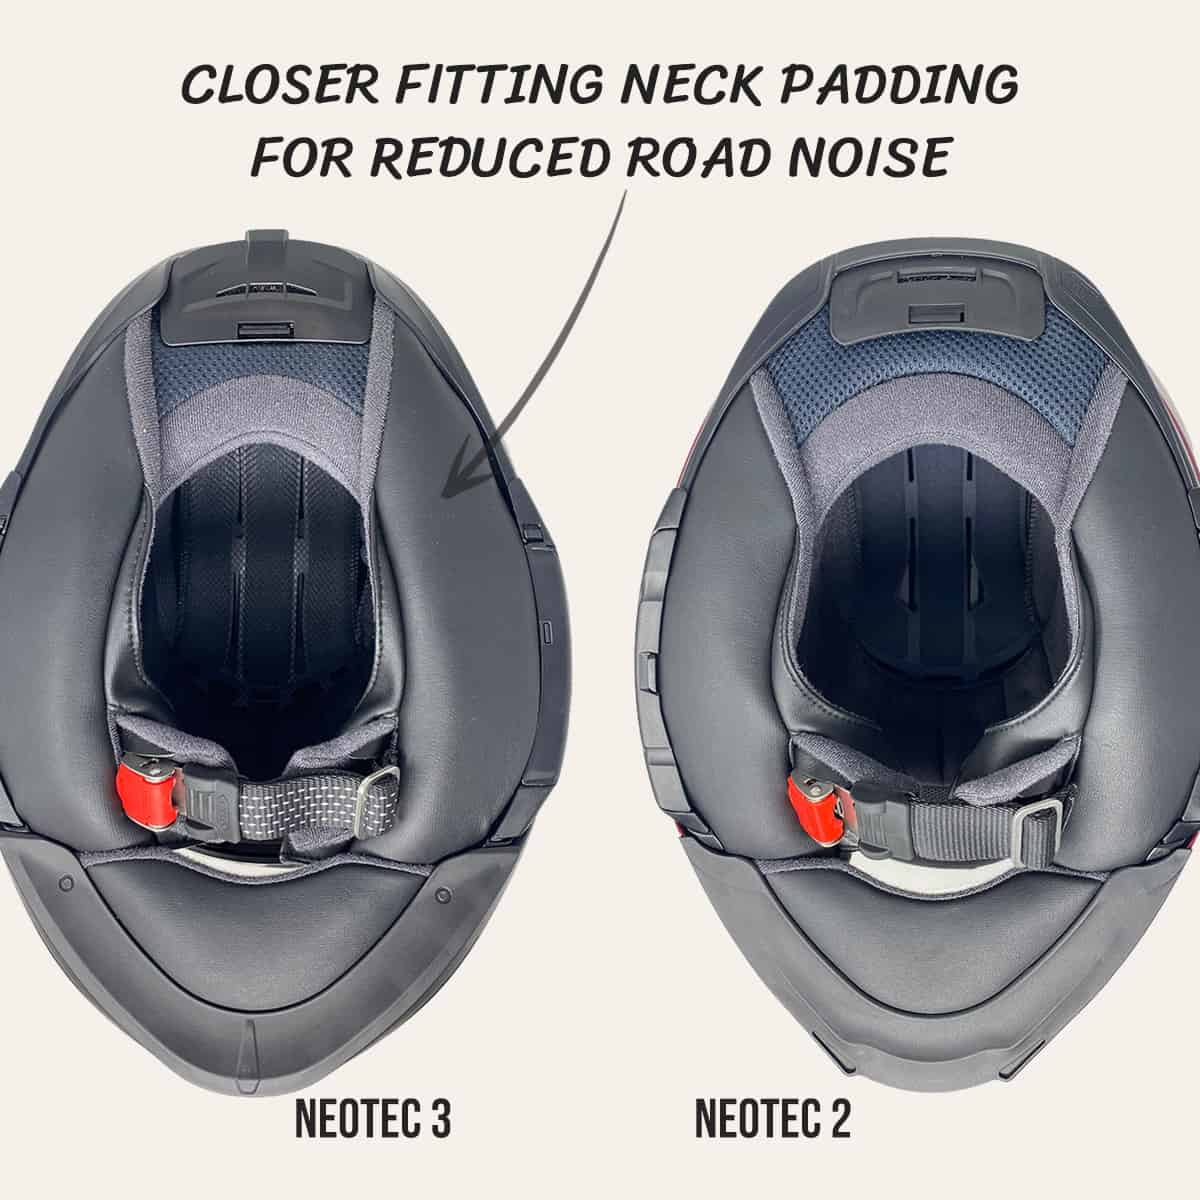 Shoei Neotec 3 - A quieter helmet 2